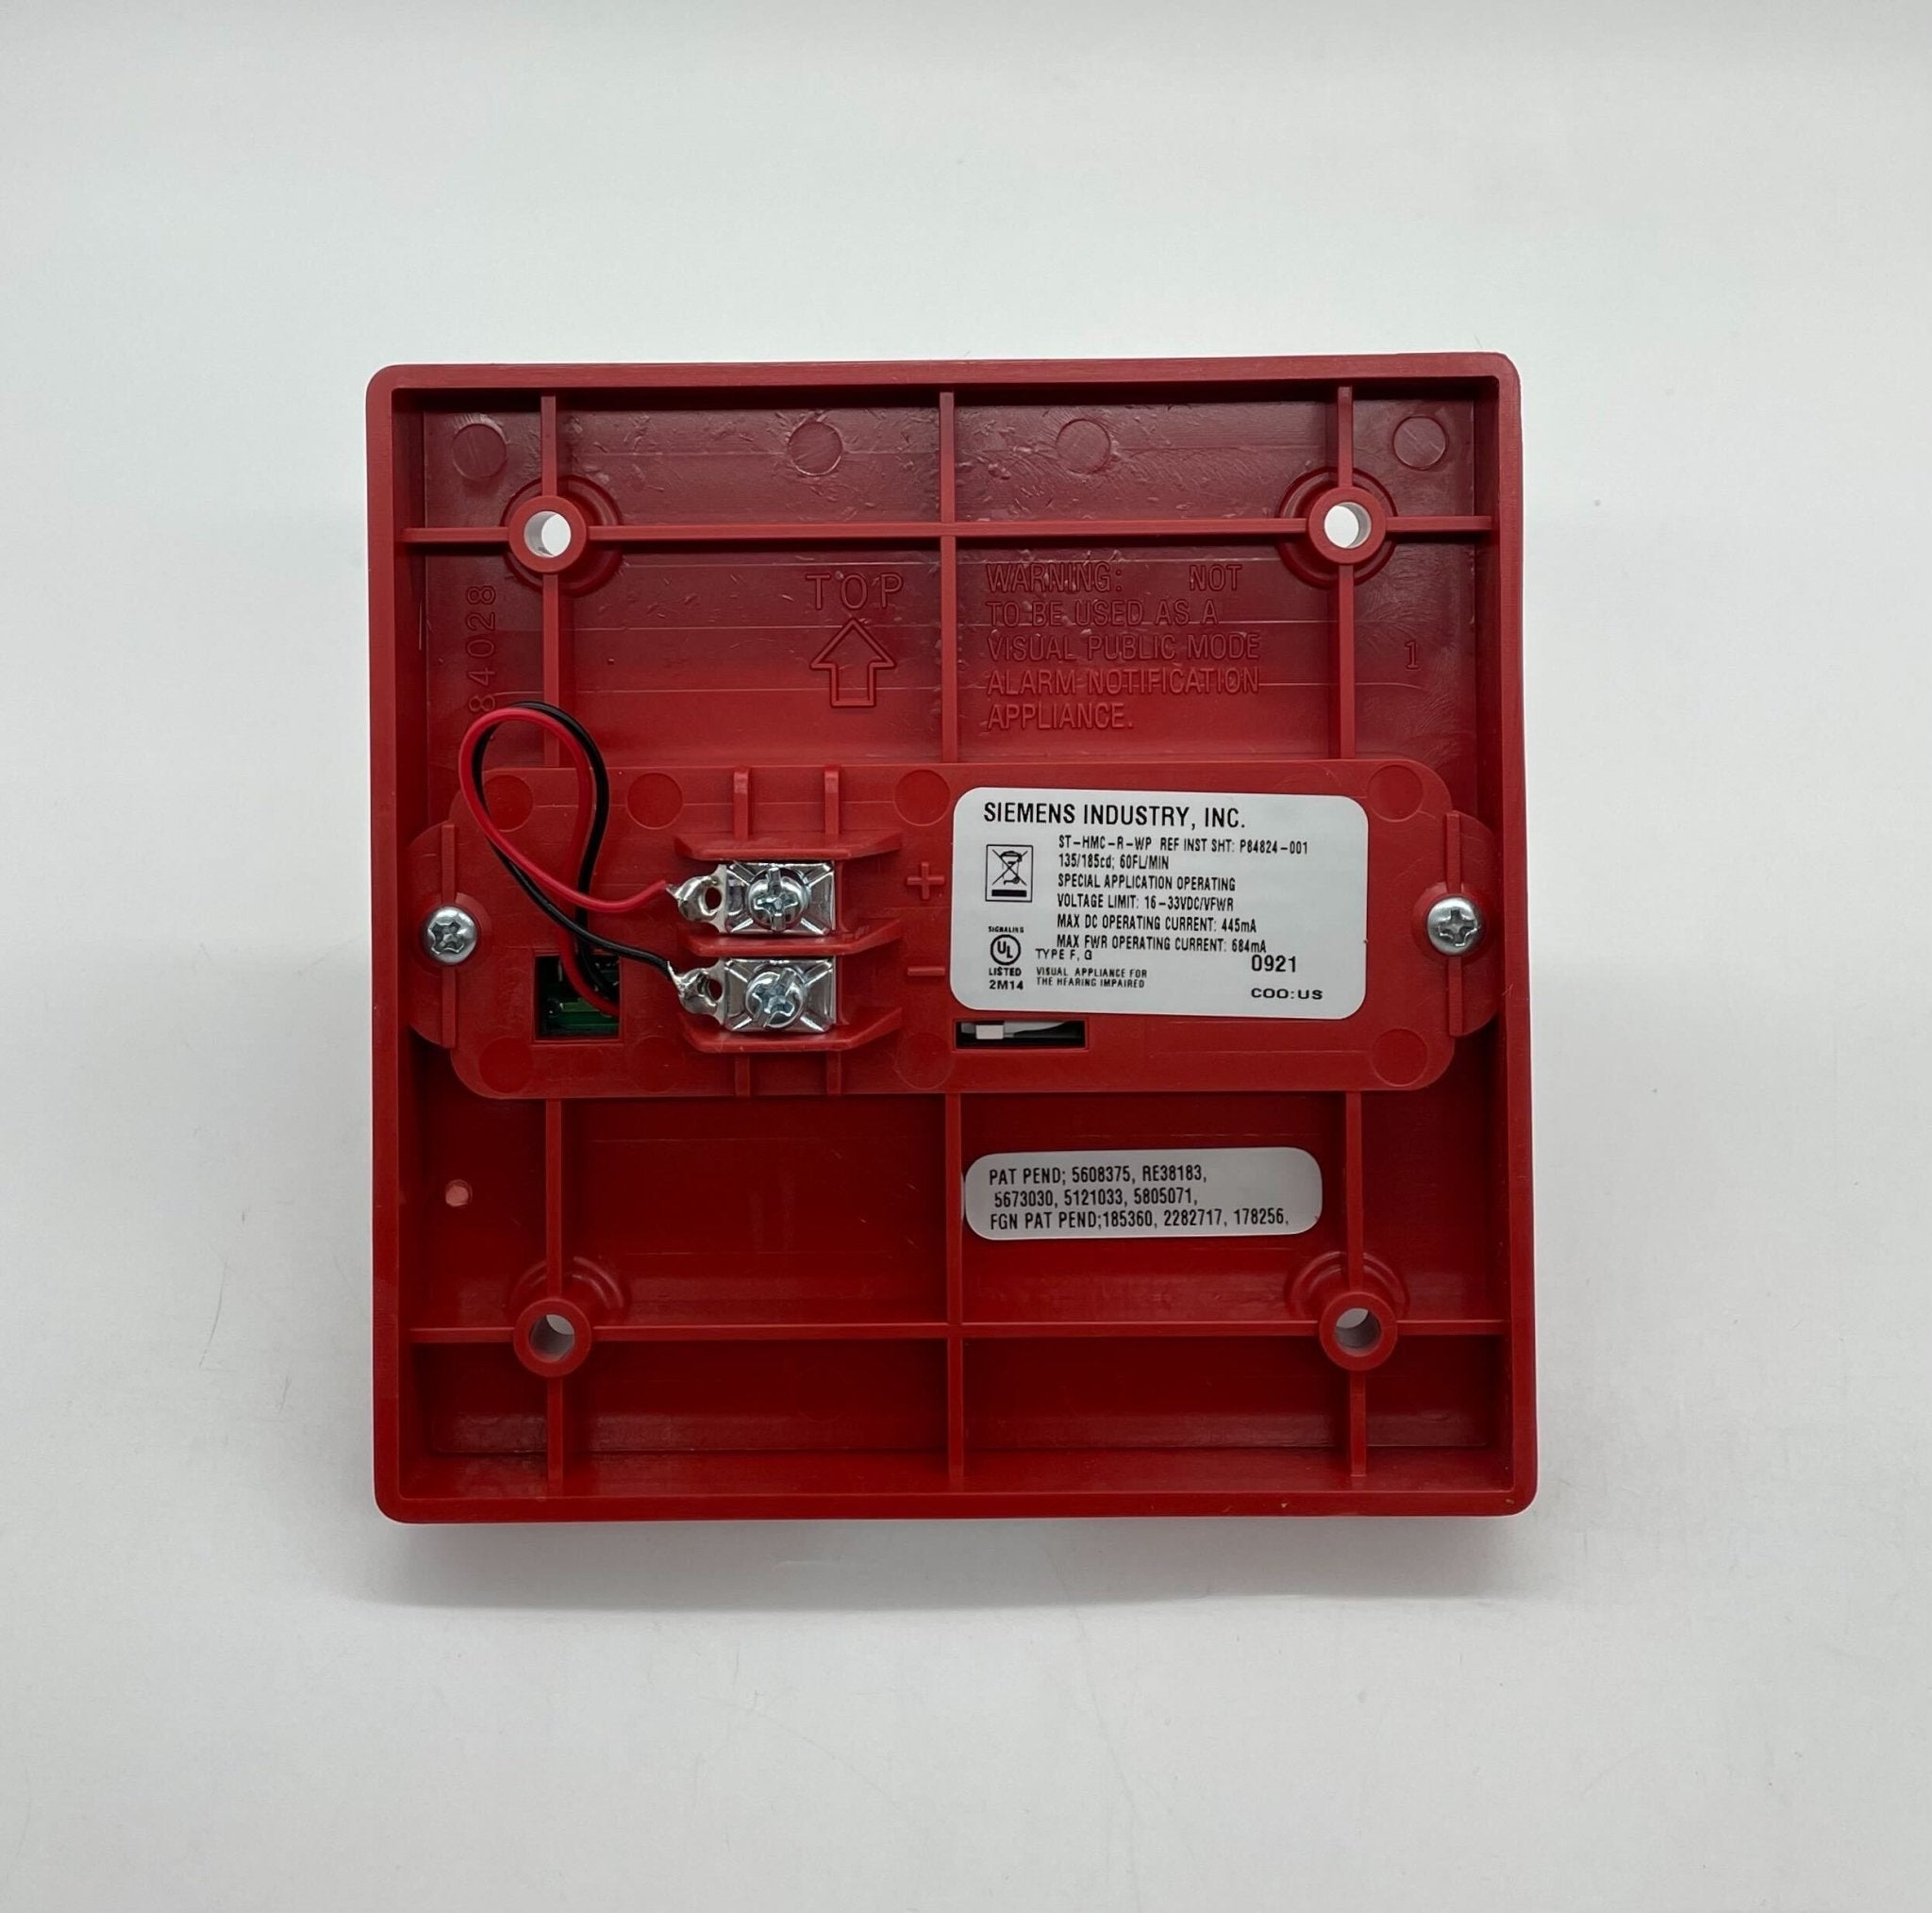 Siemens ST-HMC-R-WP Multi Candela Red Weatherproof Strobe - The Fire Alarm Supplier